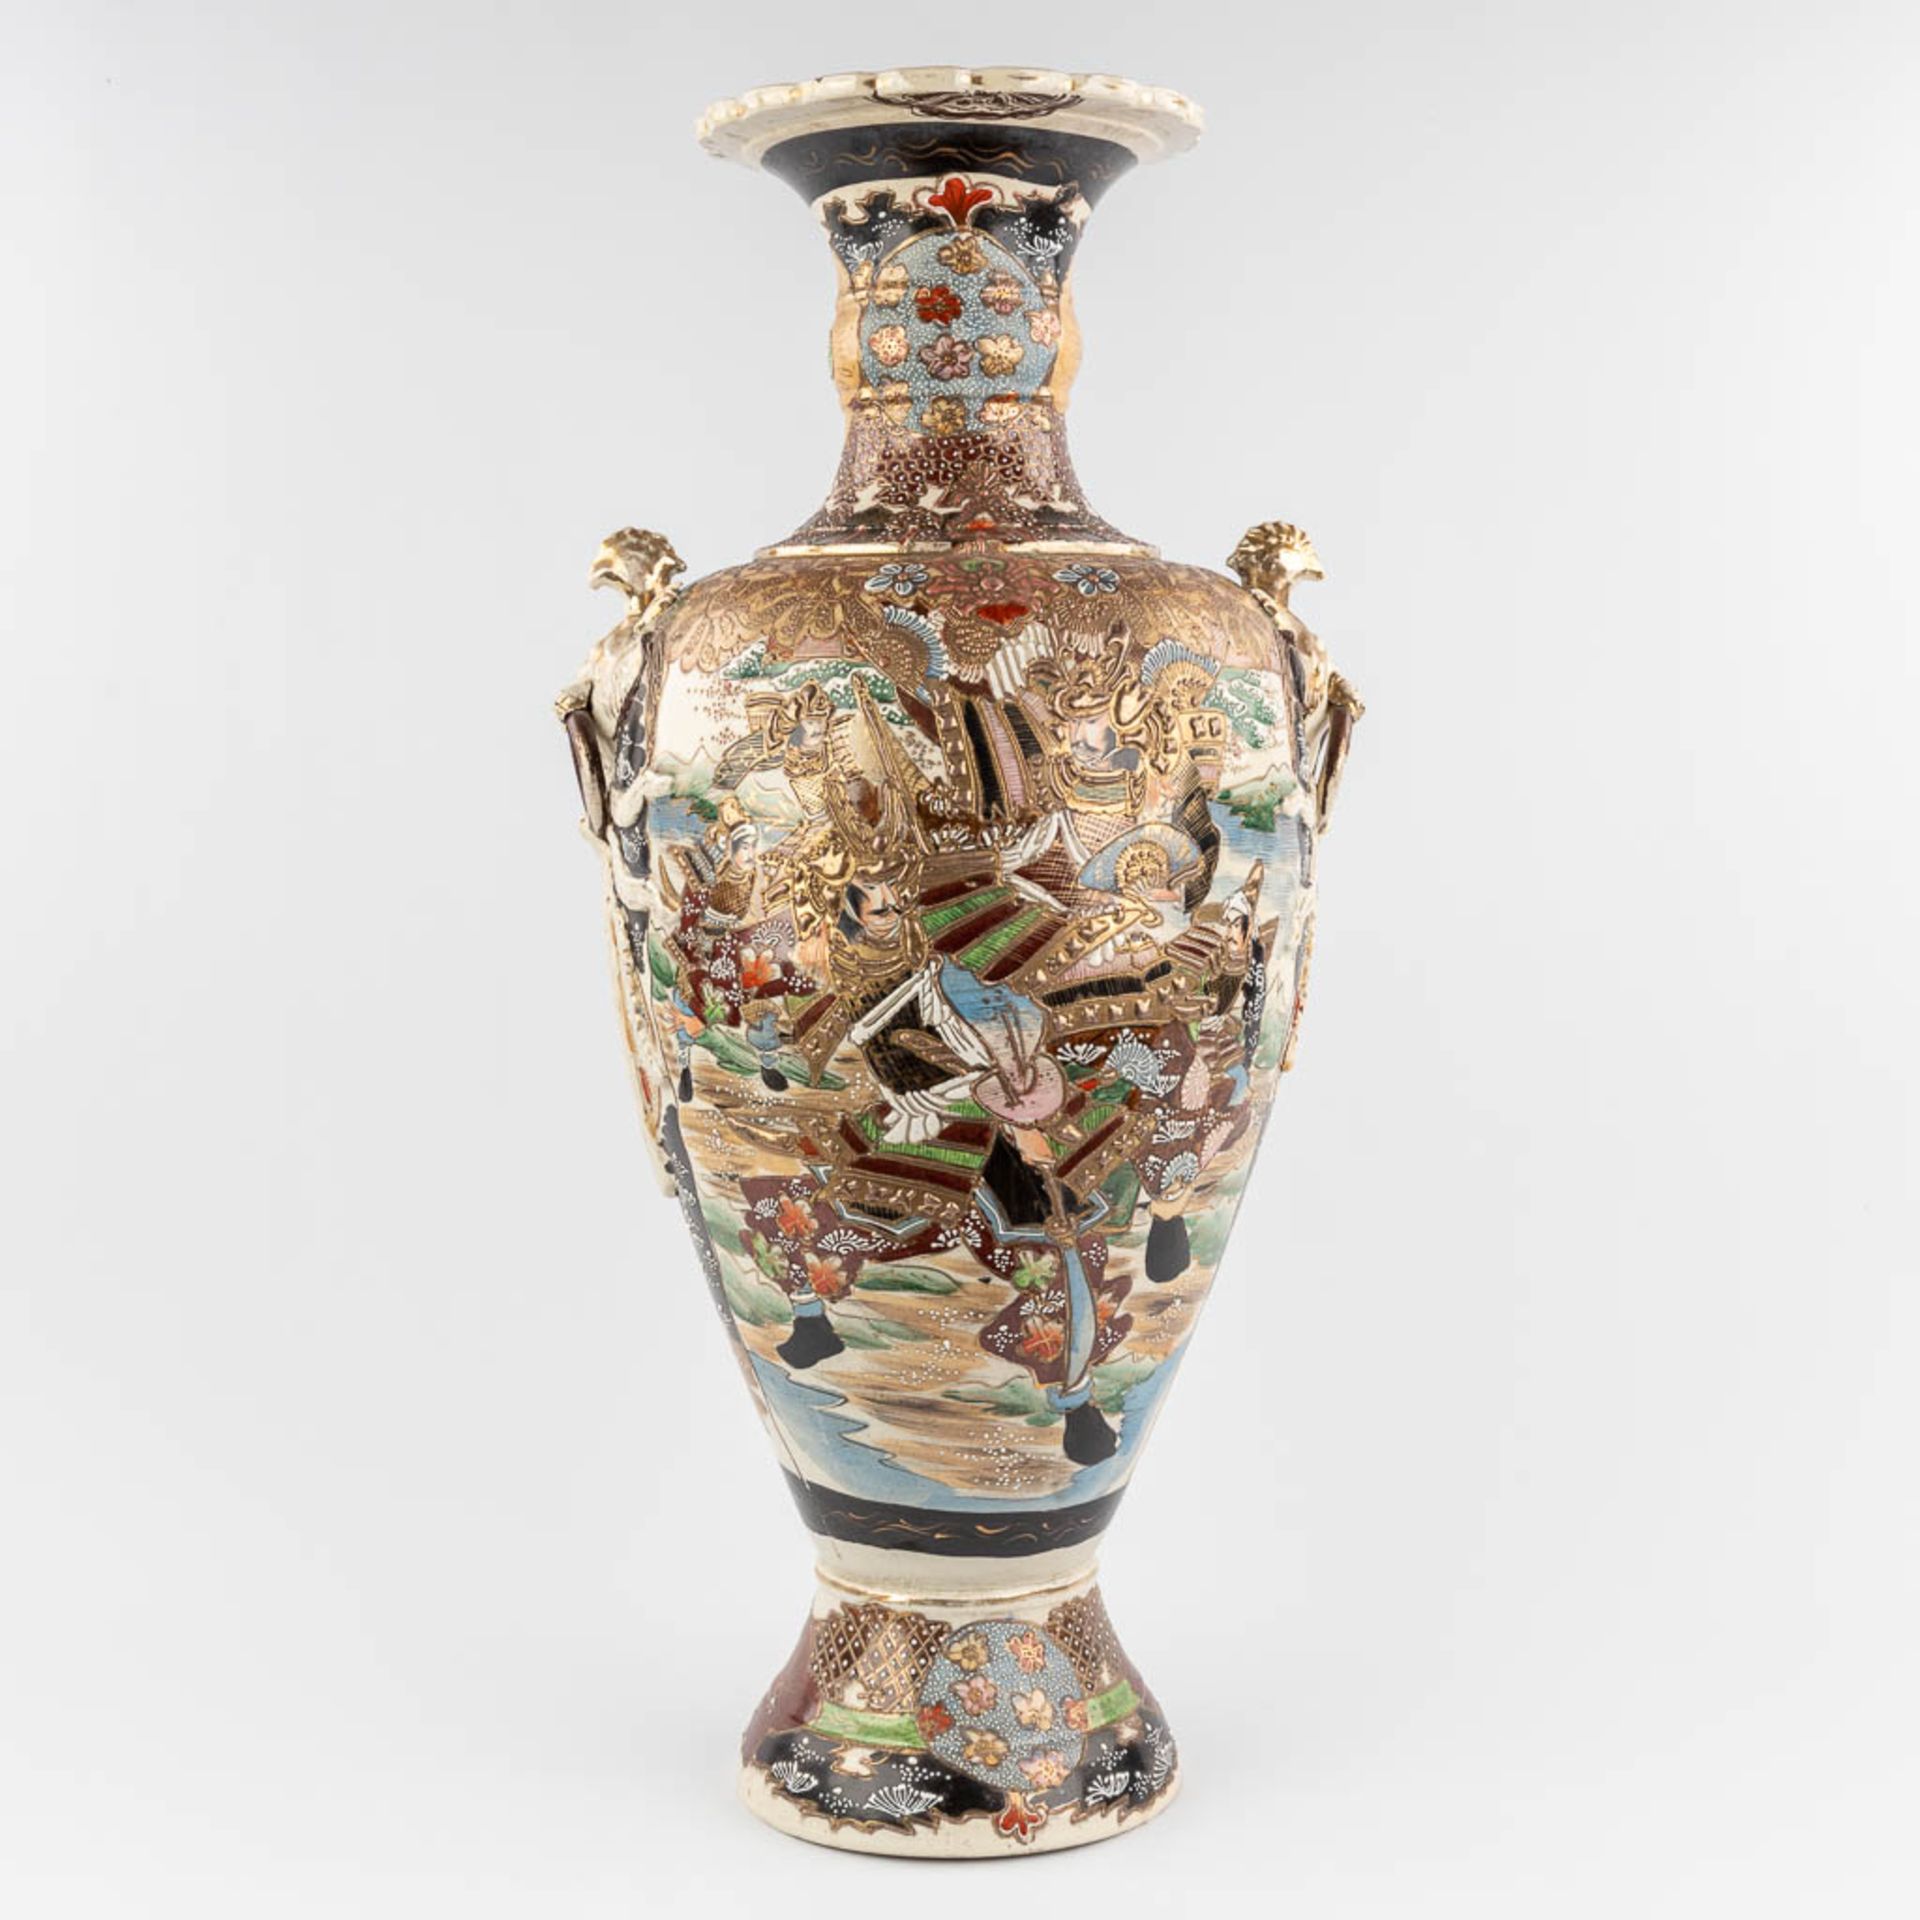 A large and decorative Japanese Satsuma vase. 20th C. (H:80 x D:32 cm)